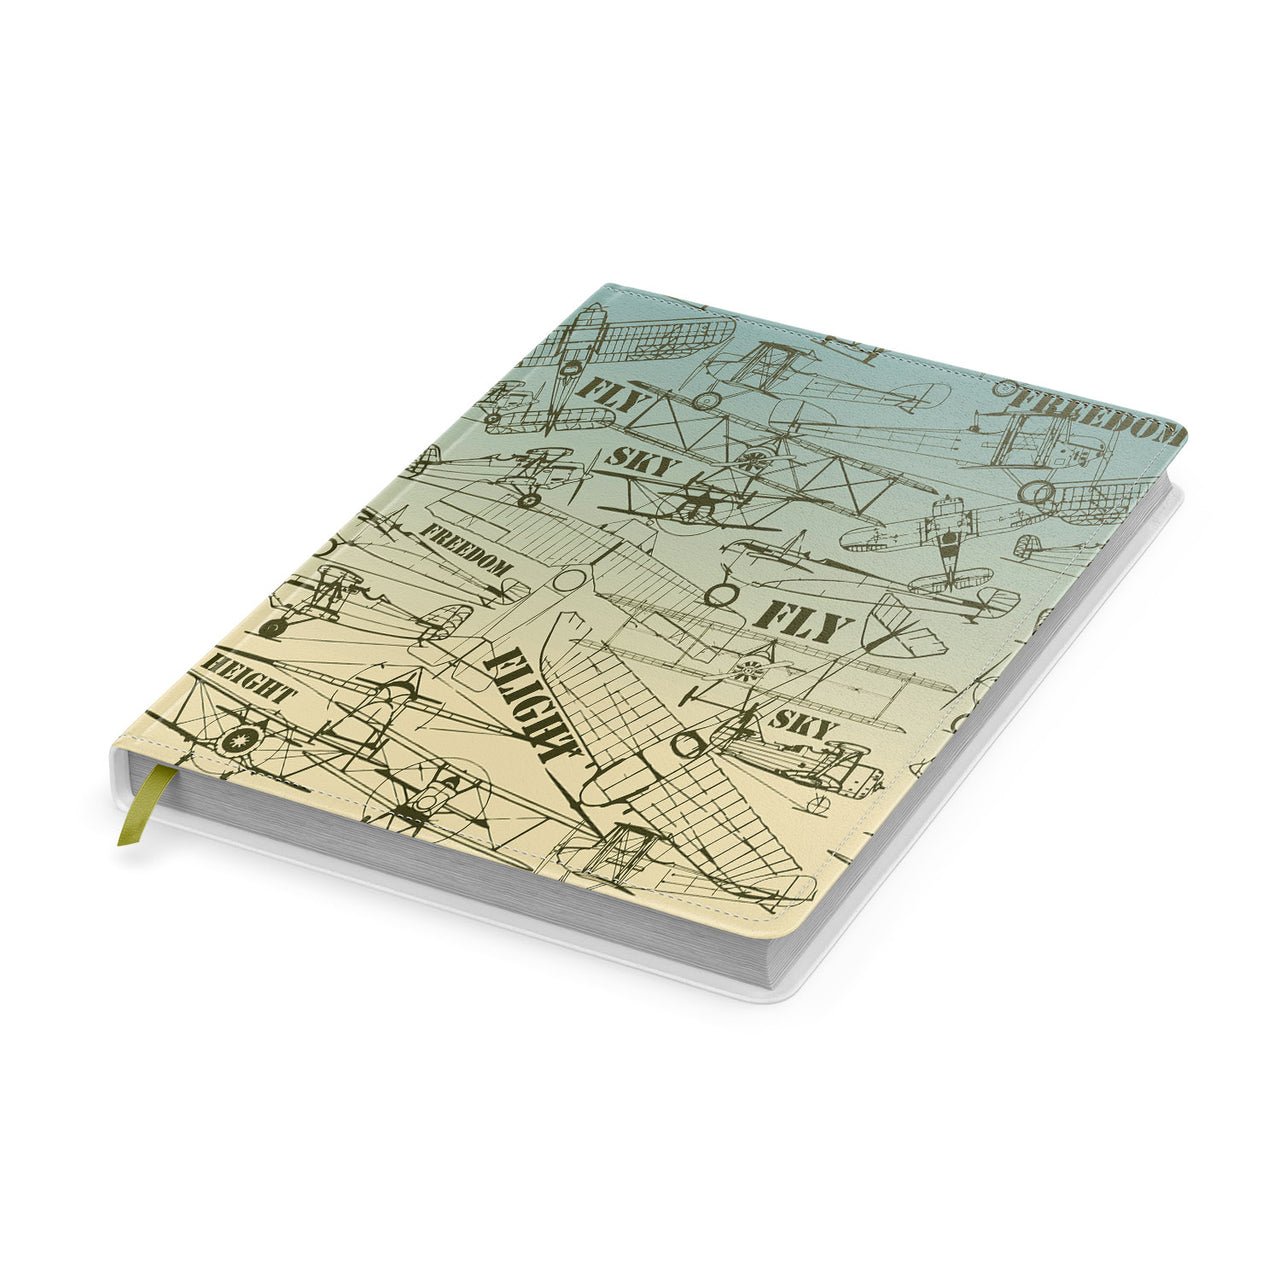 Retro Airplanes & Text Designed Notebooks